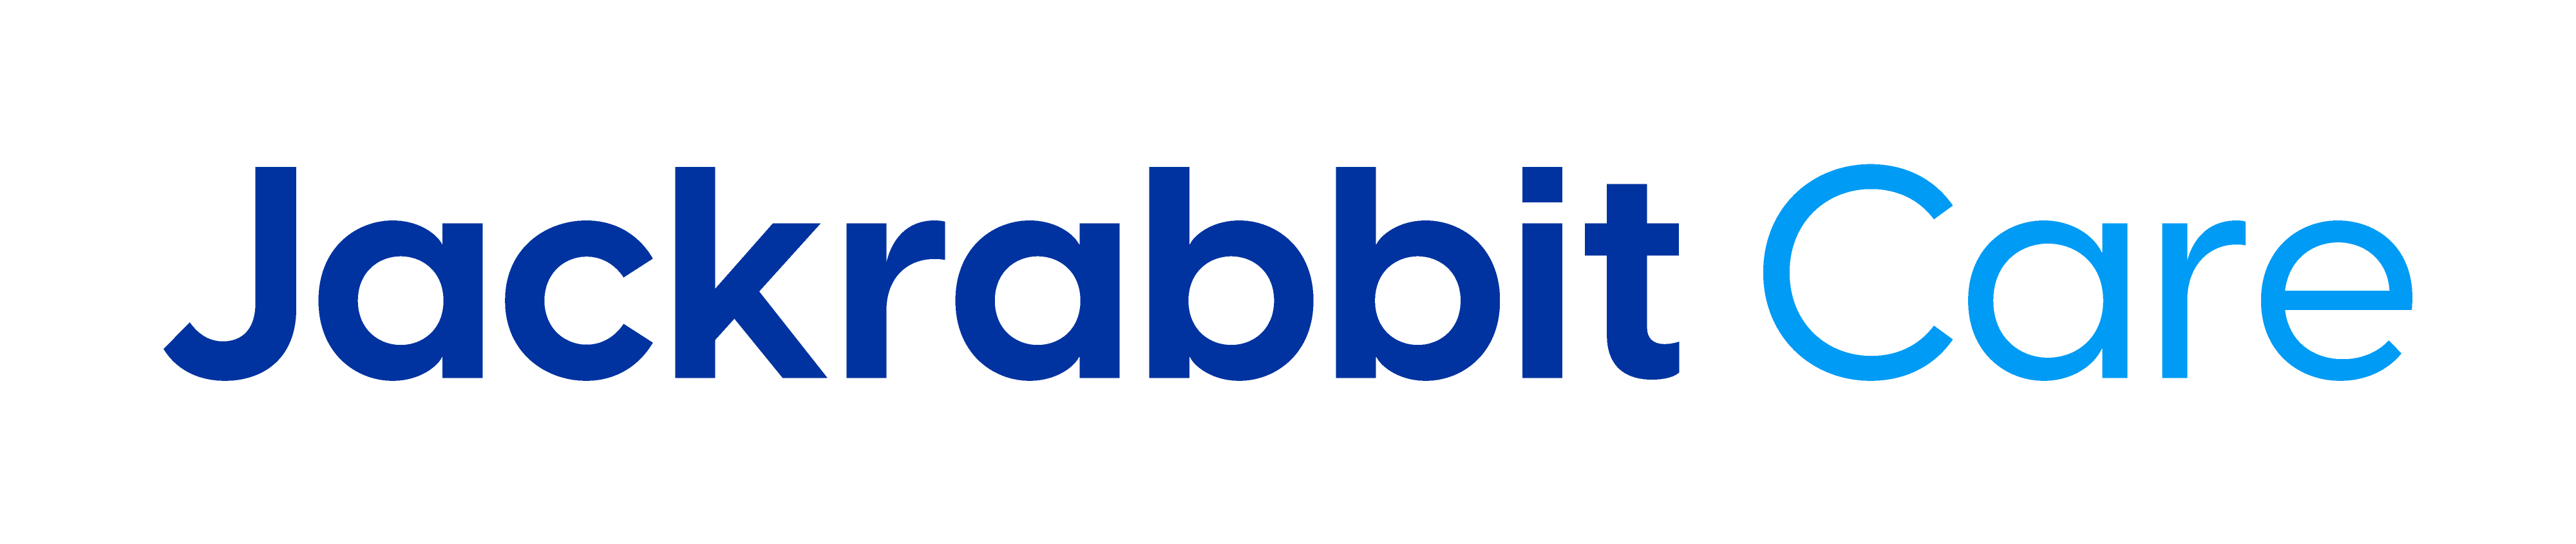 Jackrabbit Care 2D logo